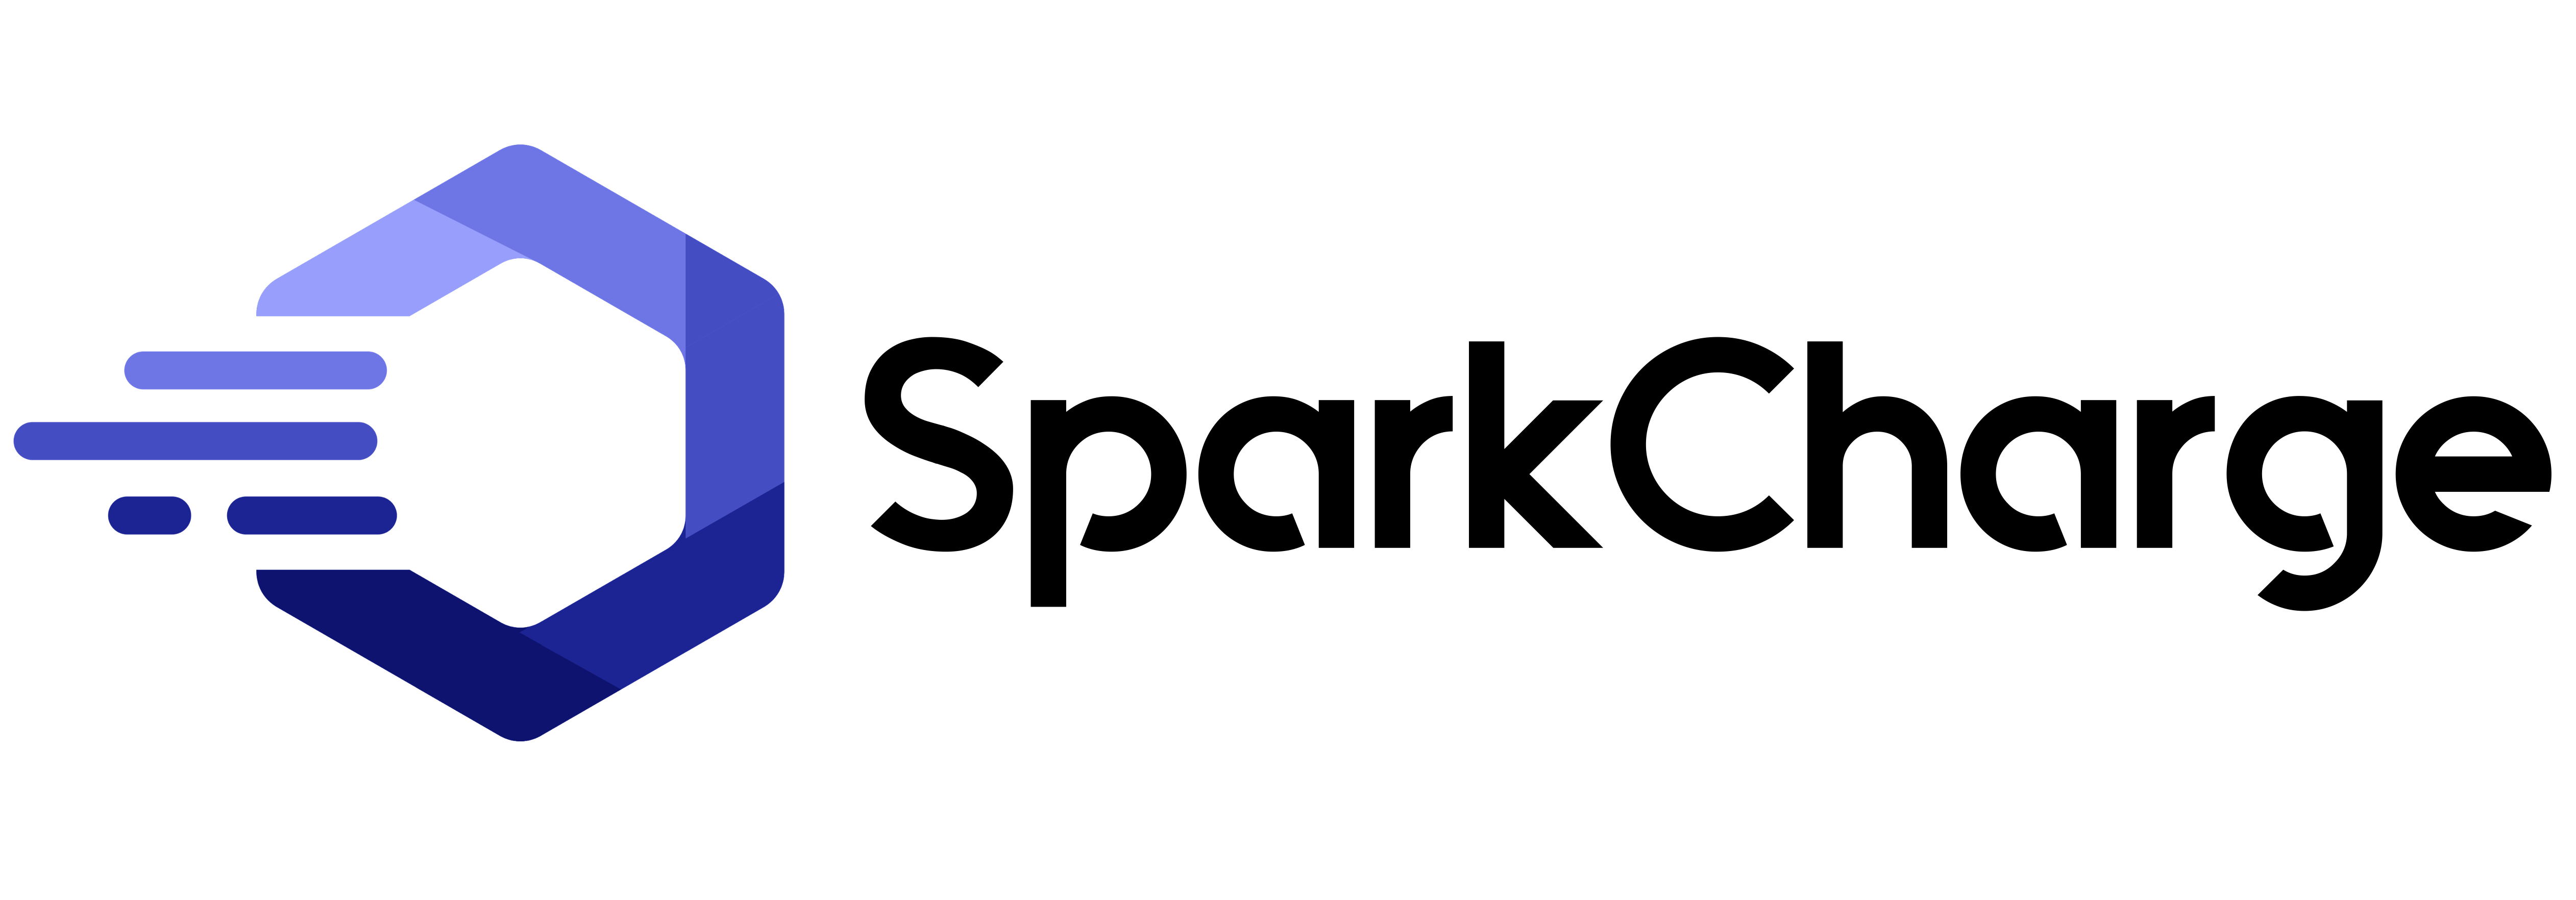 sparkcharge logo